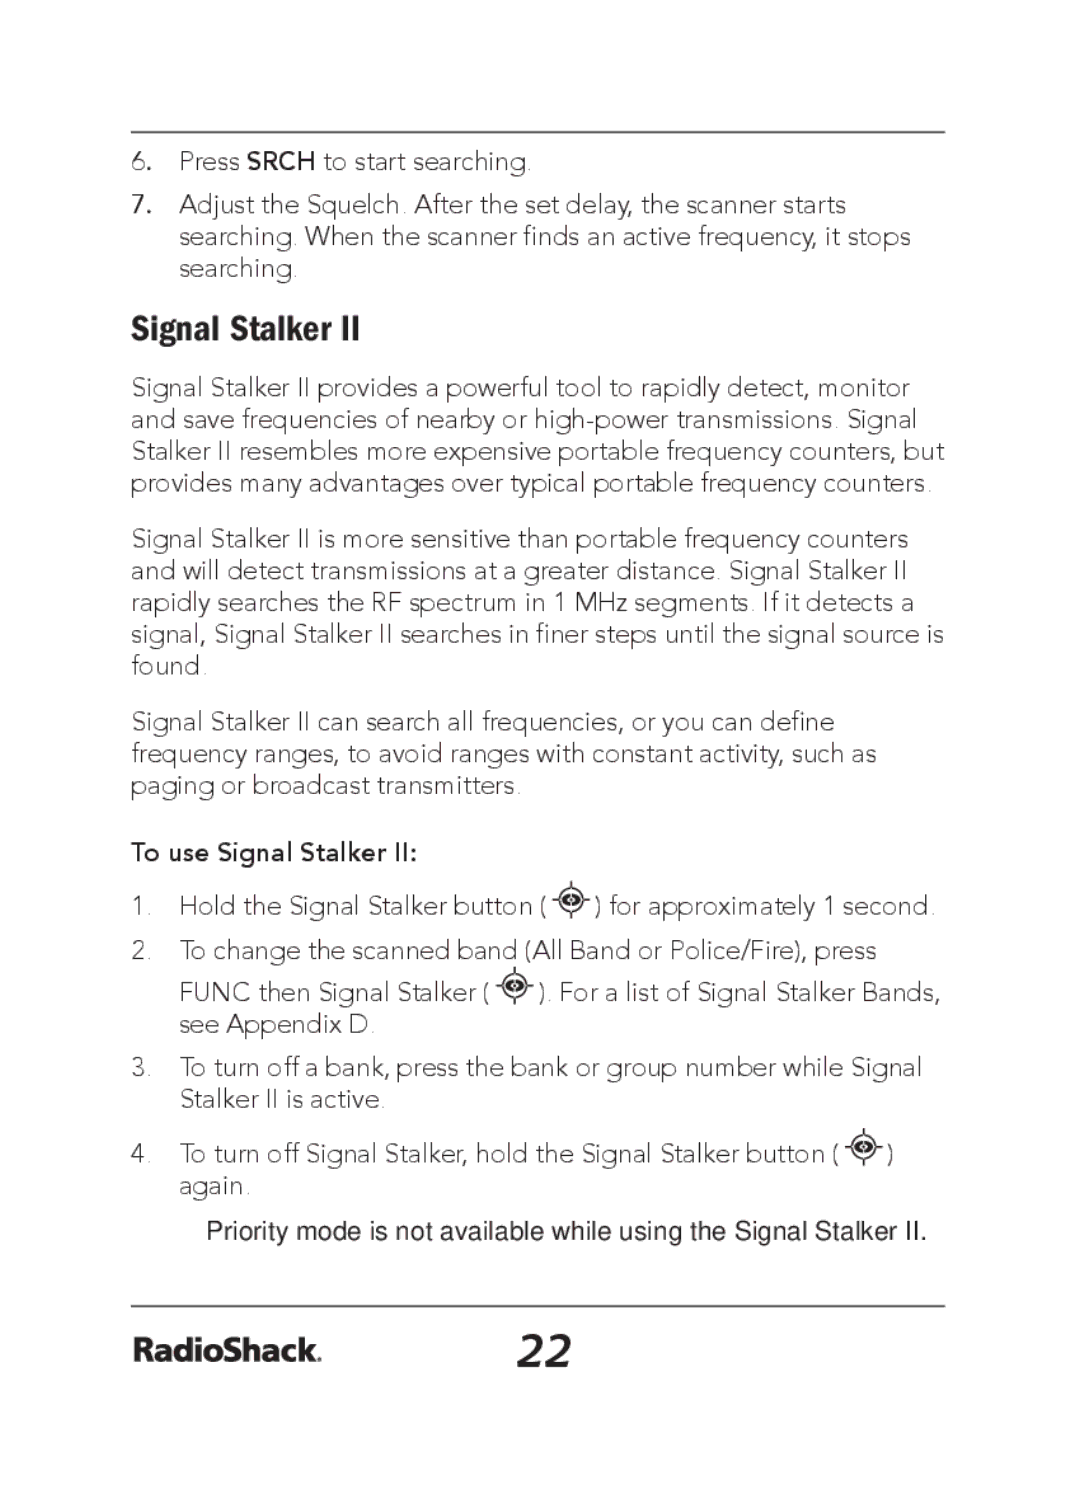 Radio Shack 20-163 manual To use Signal Stalker 